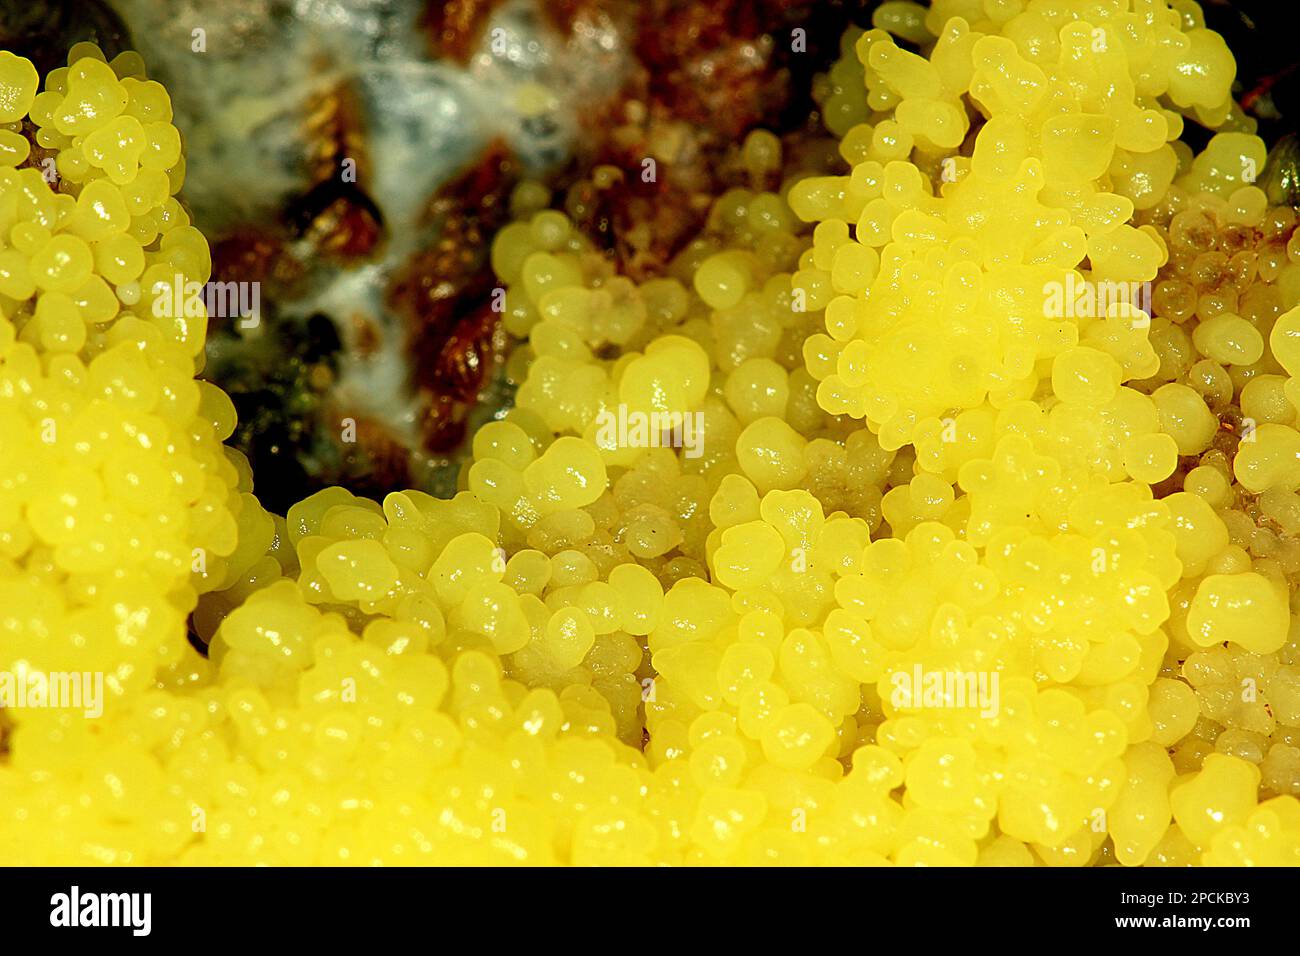 Yellow dog vomit slime mould (Didymium mucilago) Stock Photo